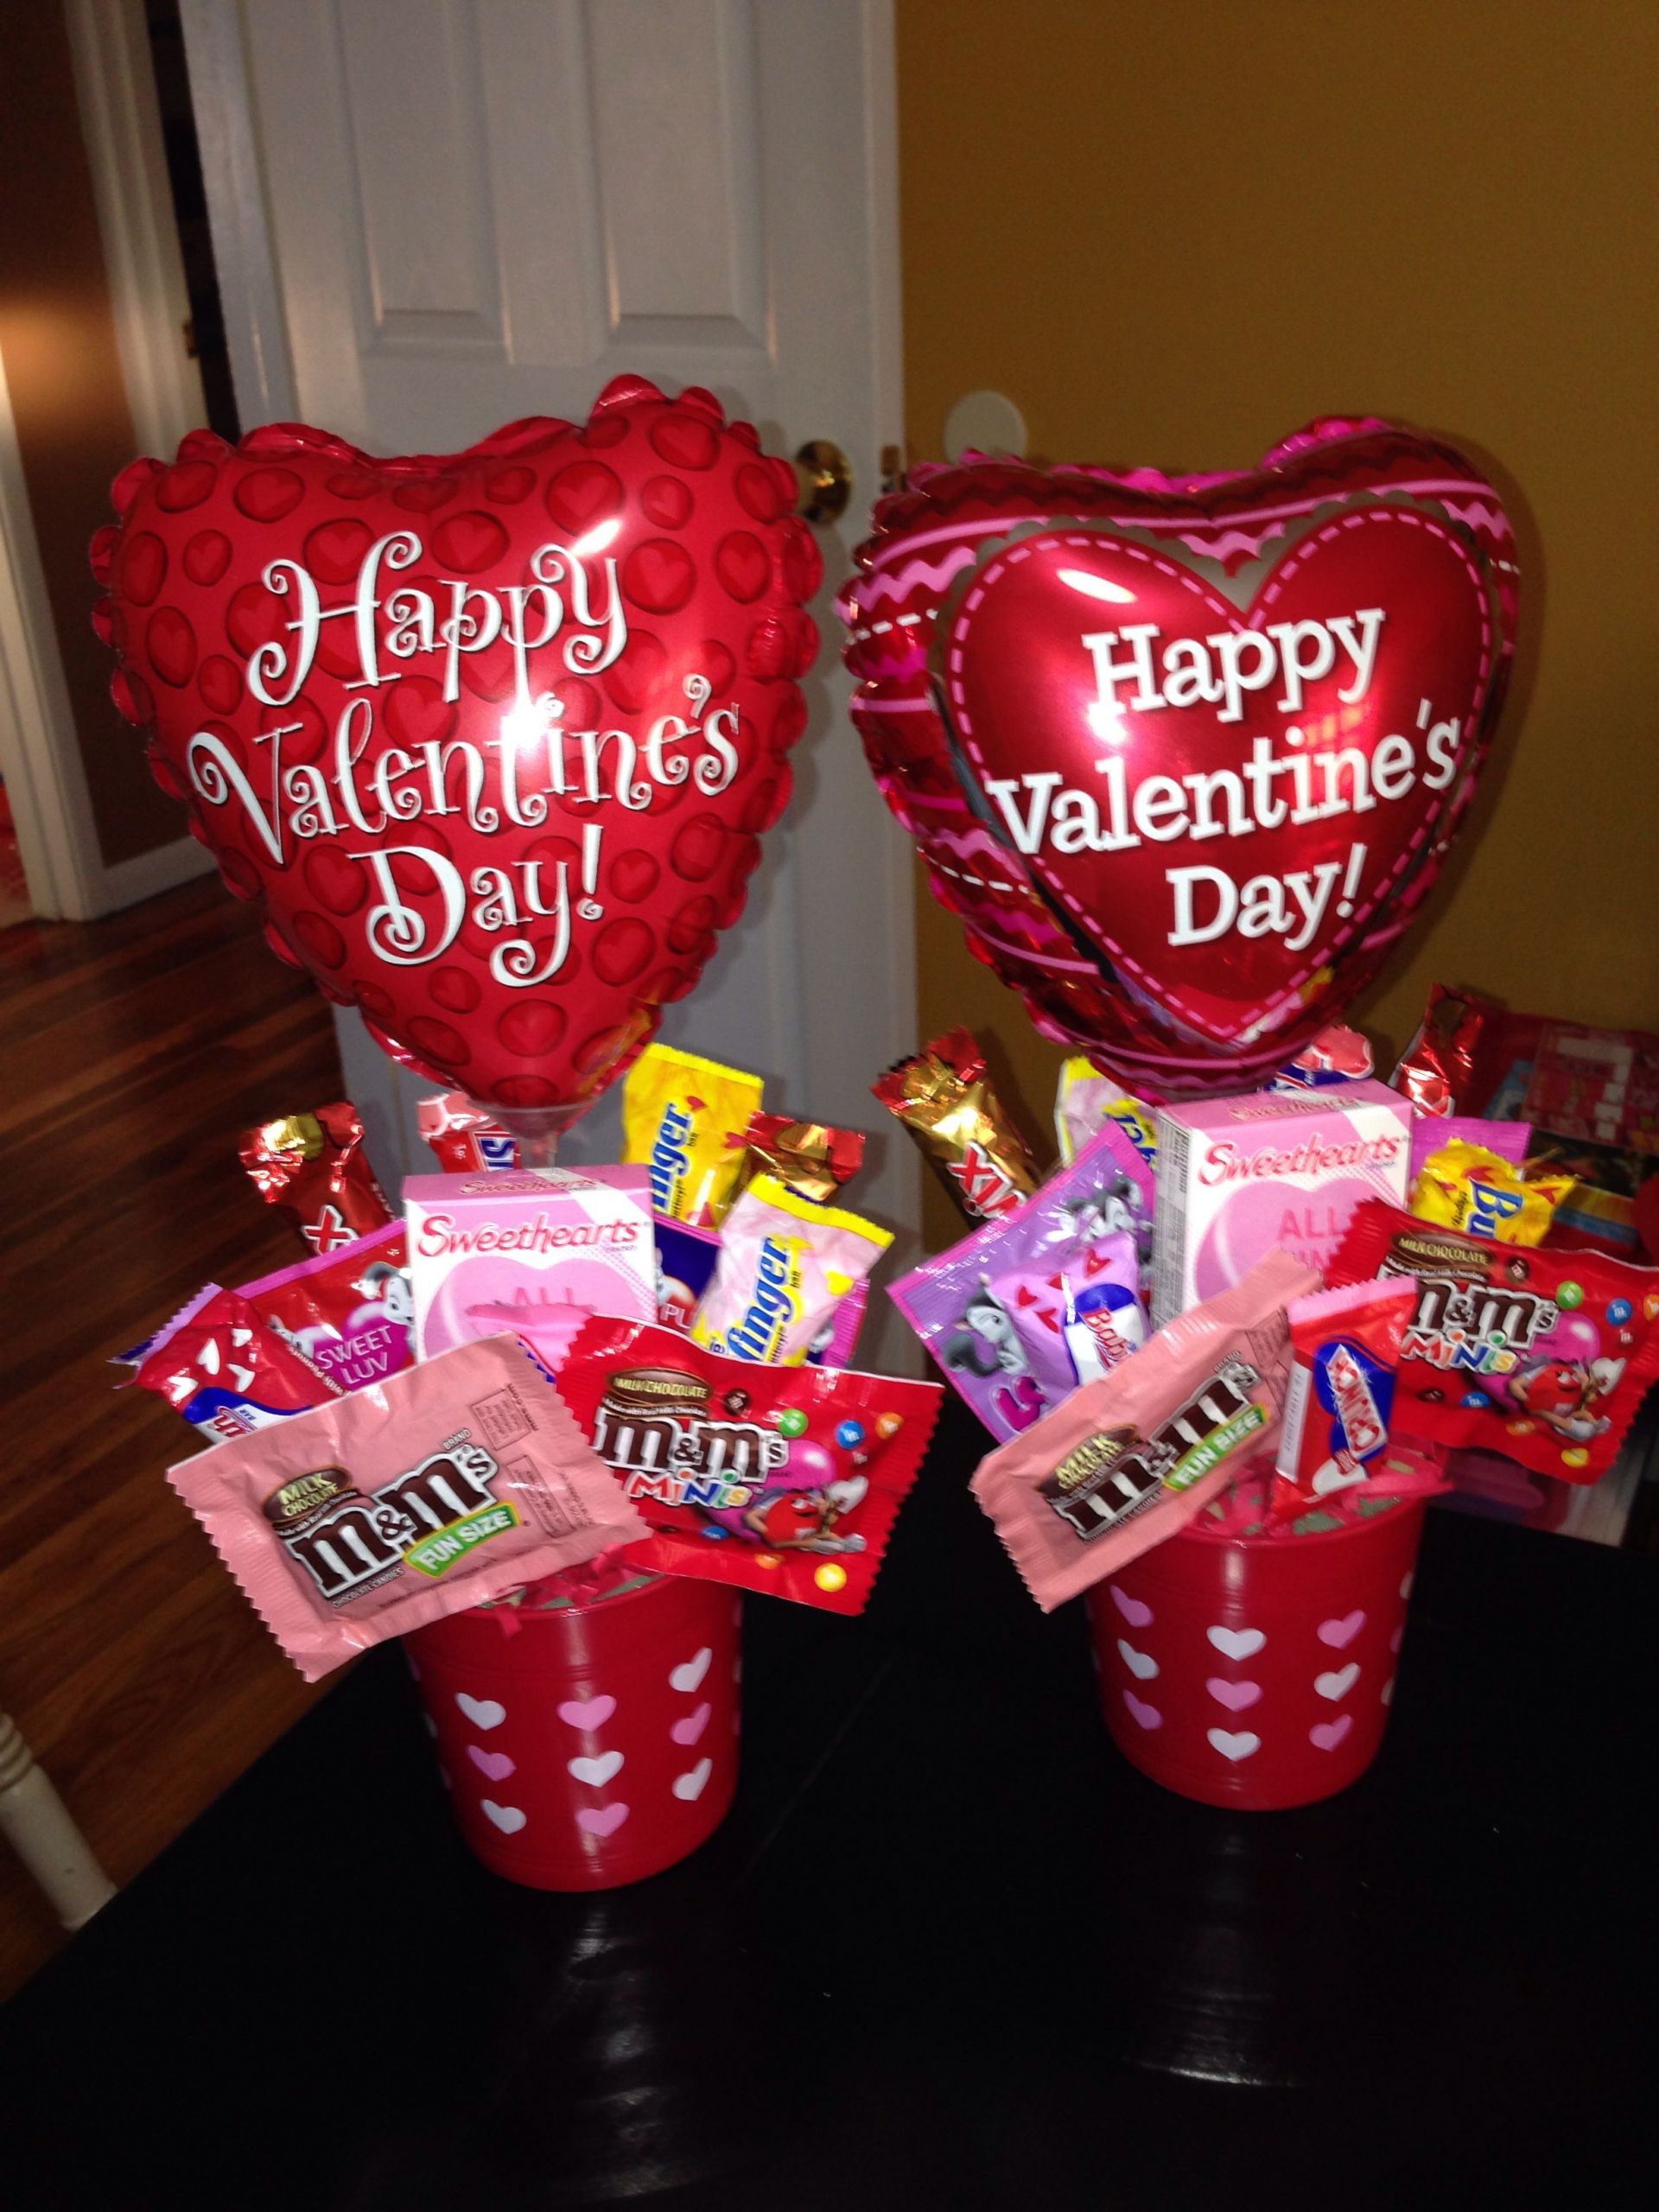 Valentine'S Day Gift Basket Ideas
 Small valentines bouquets